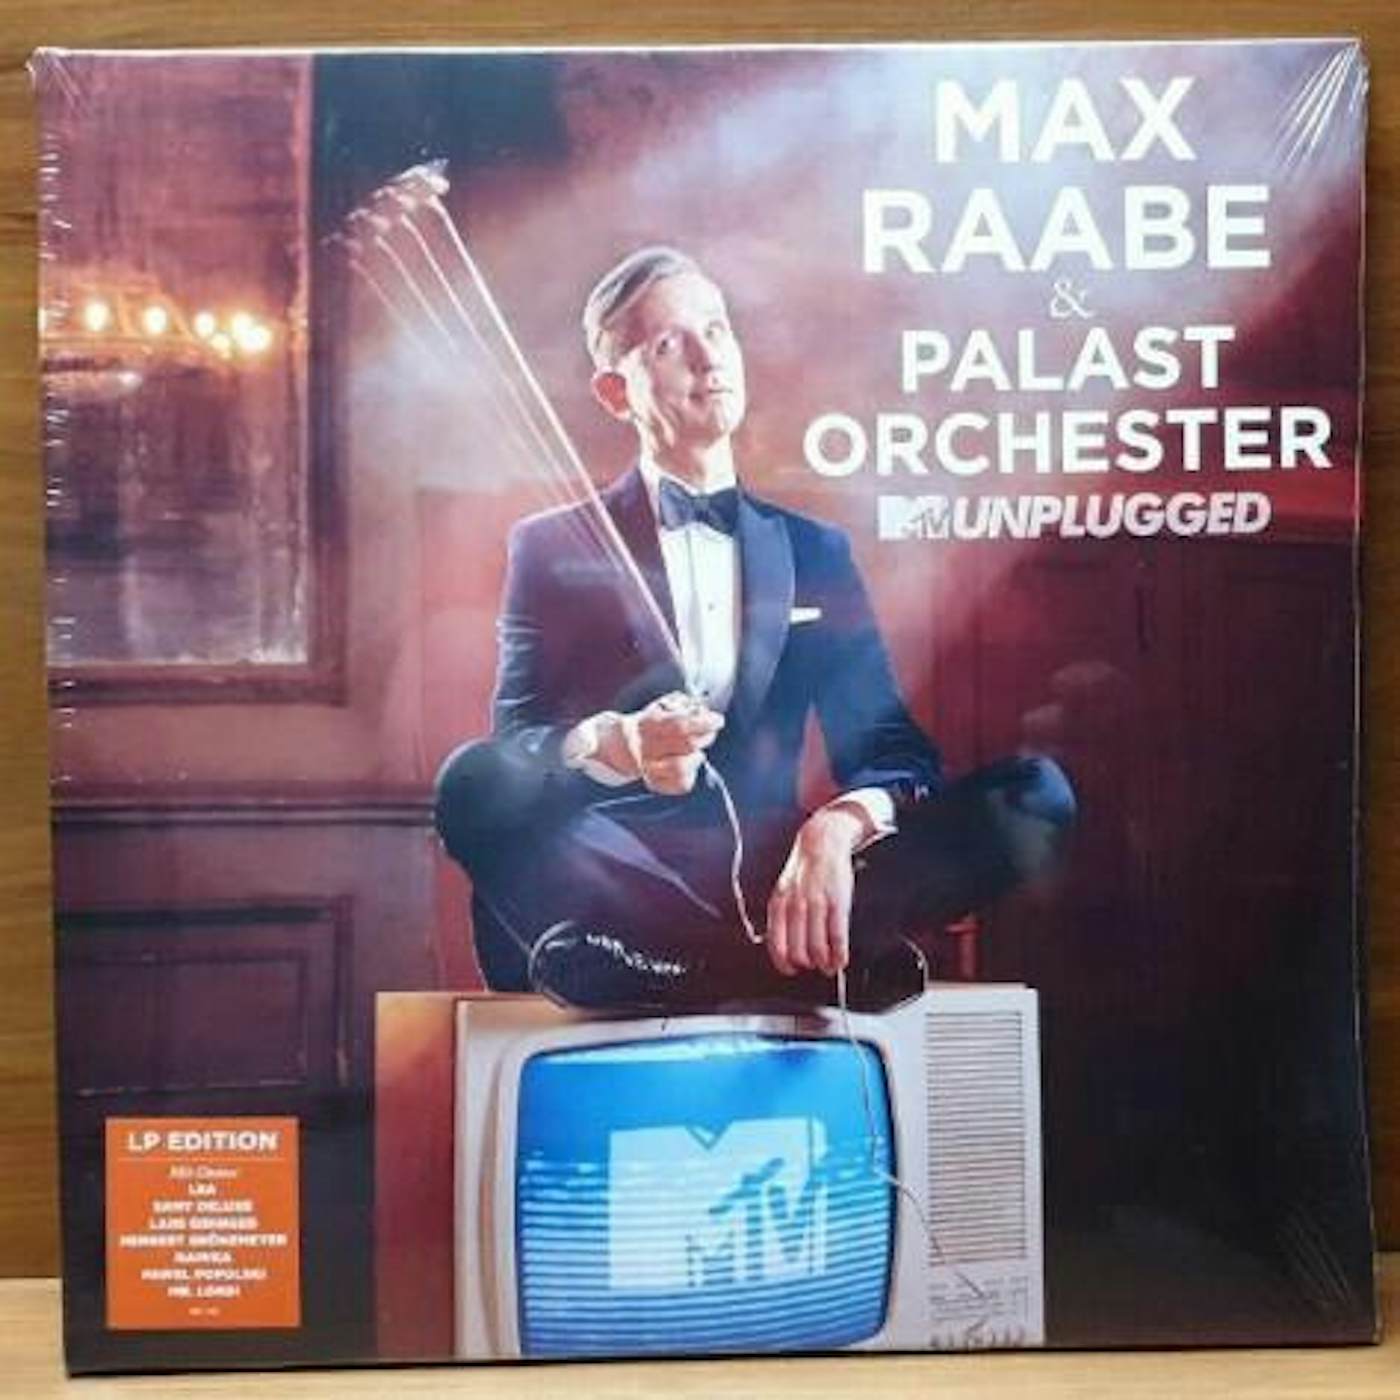 Max Raabe & Palast Orchester MTV UNPLUGGED CD